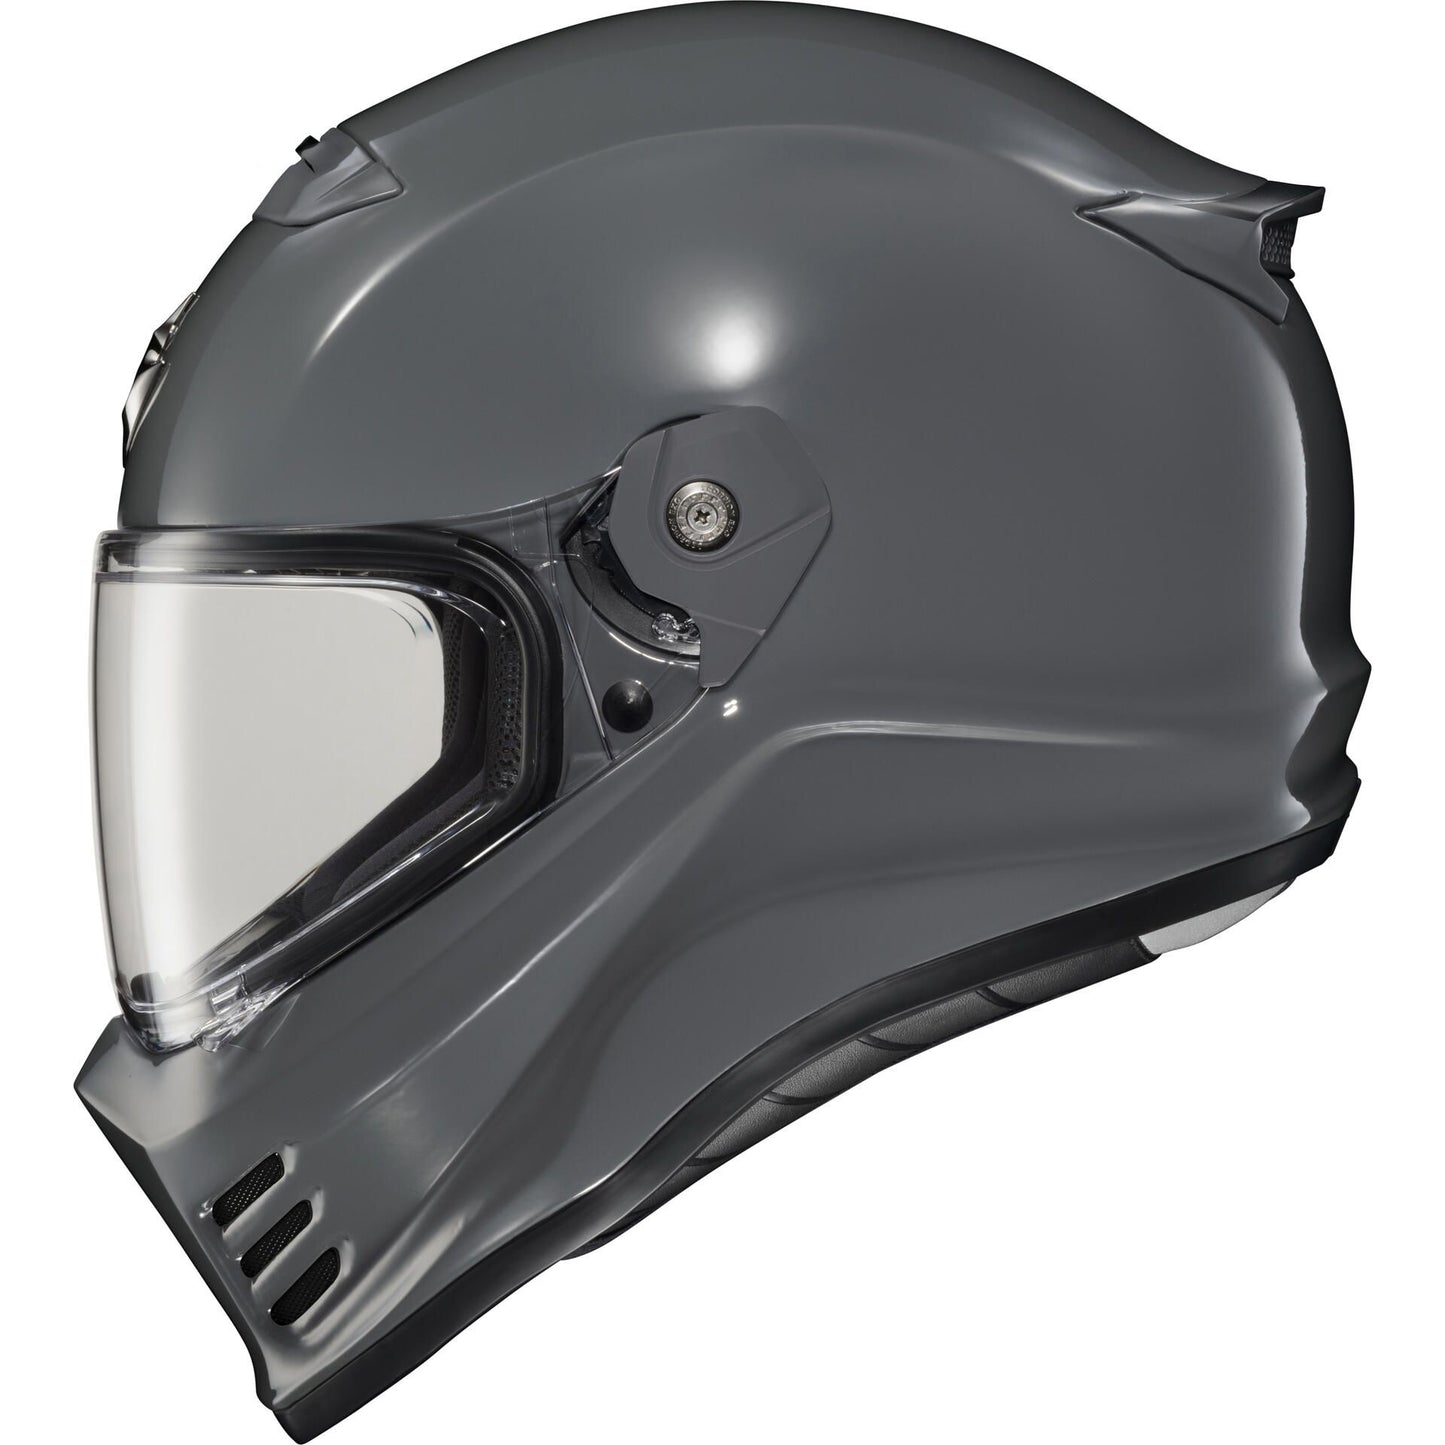 Scorpion Covert FX Street Fighter Helmet - Cement Grey